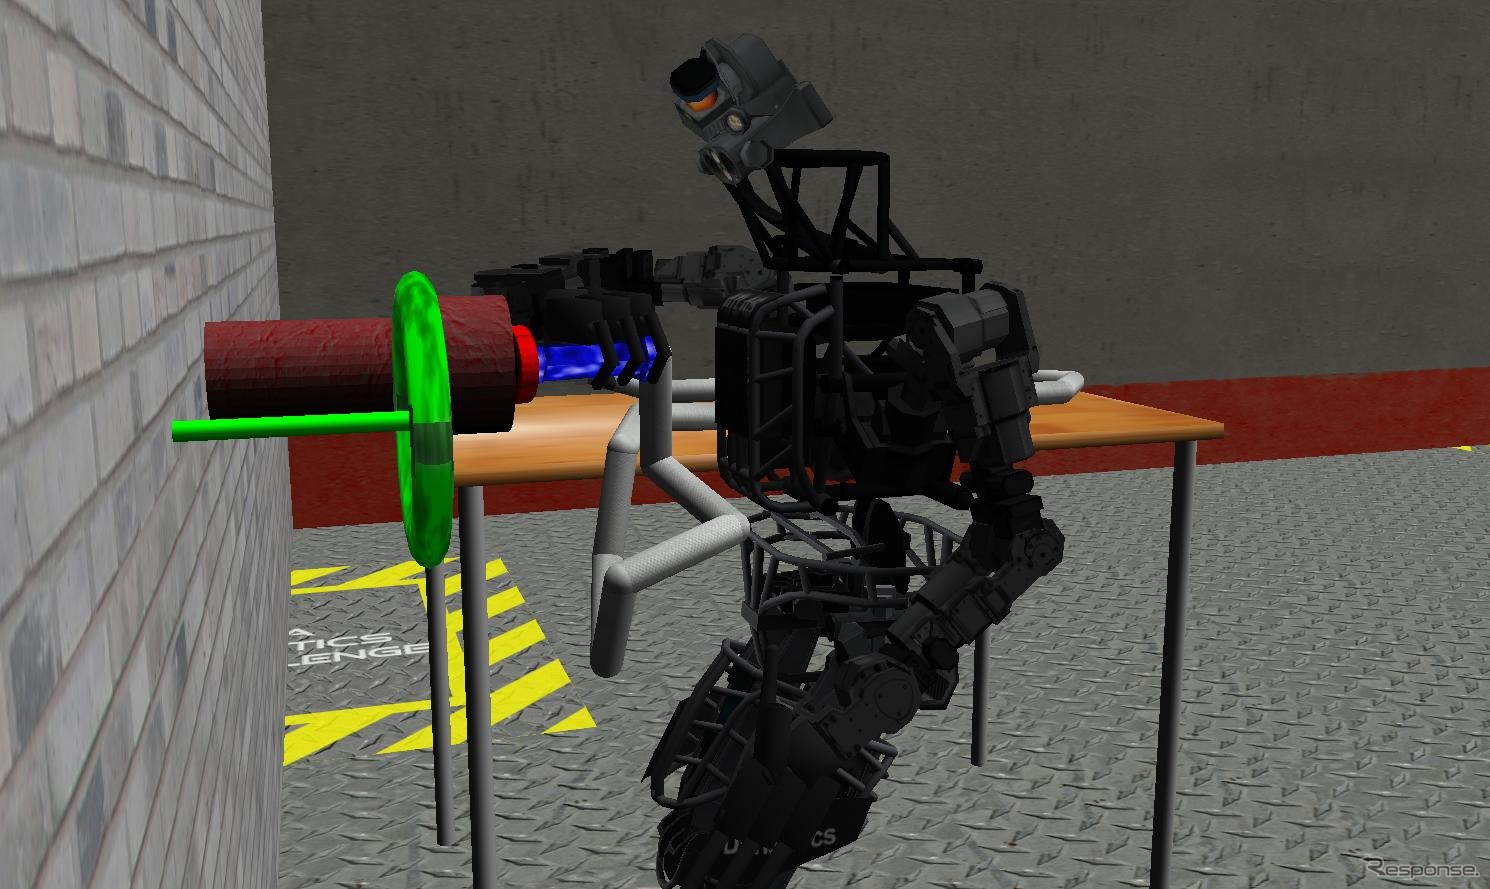 DARPAバーチャル・ロボティクス・チャレンジ課題の一つ。ホースを拾ってパイプにつなぎ、バルブを回す動作をシミュレーター上で行う